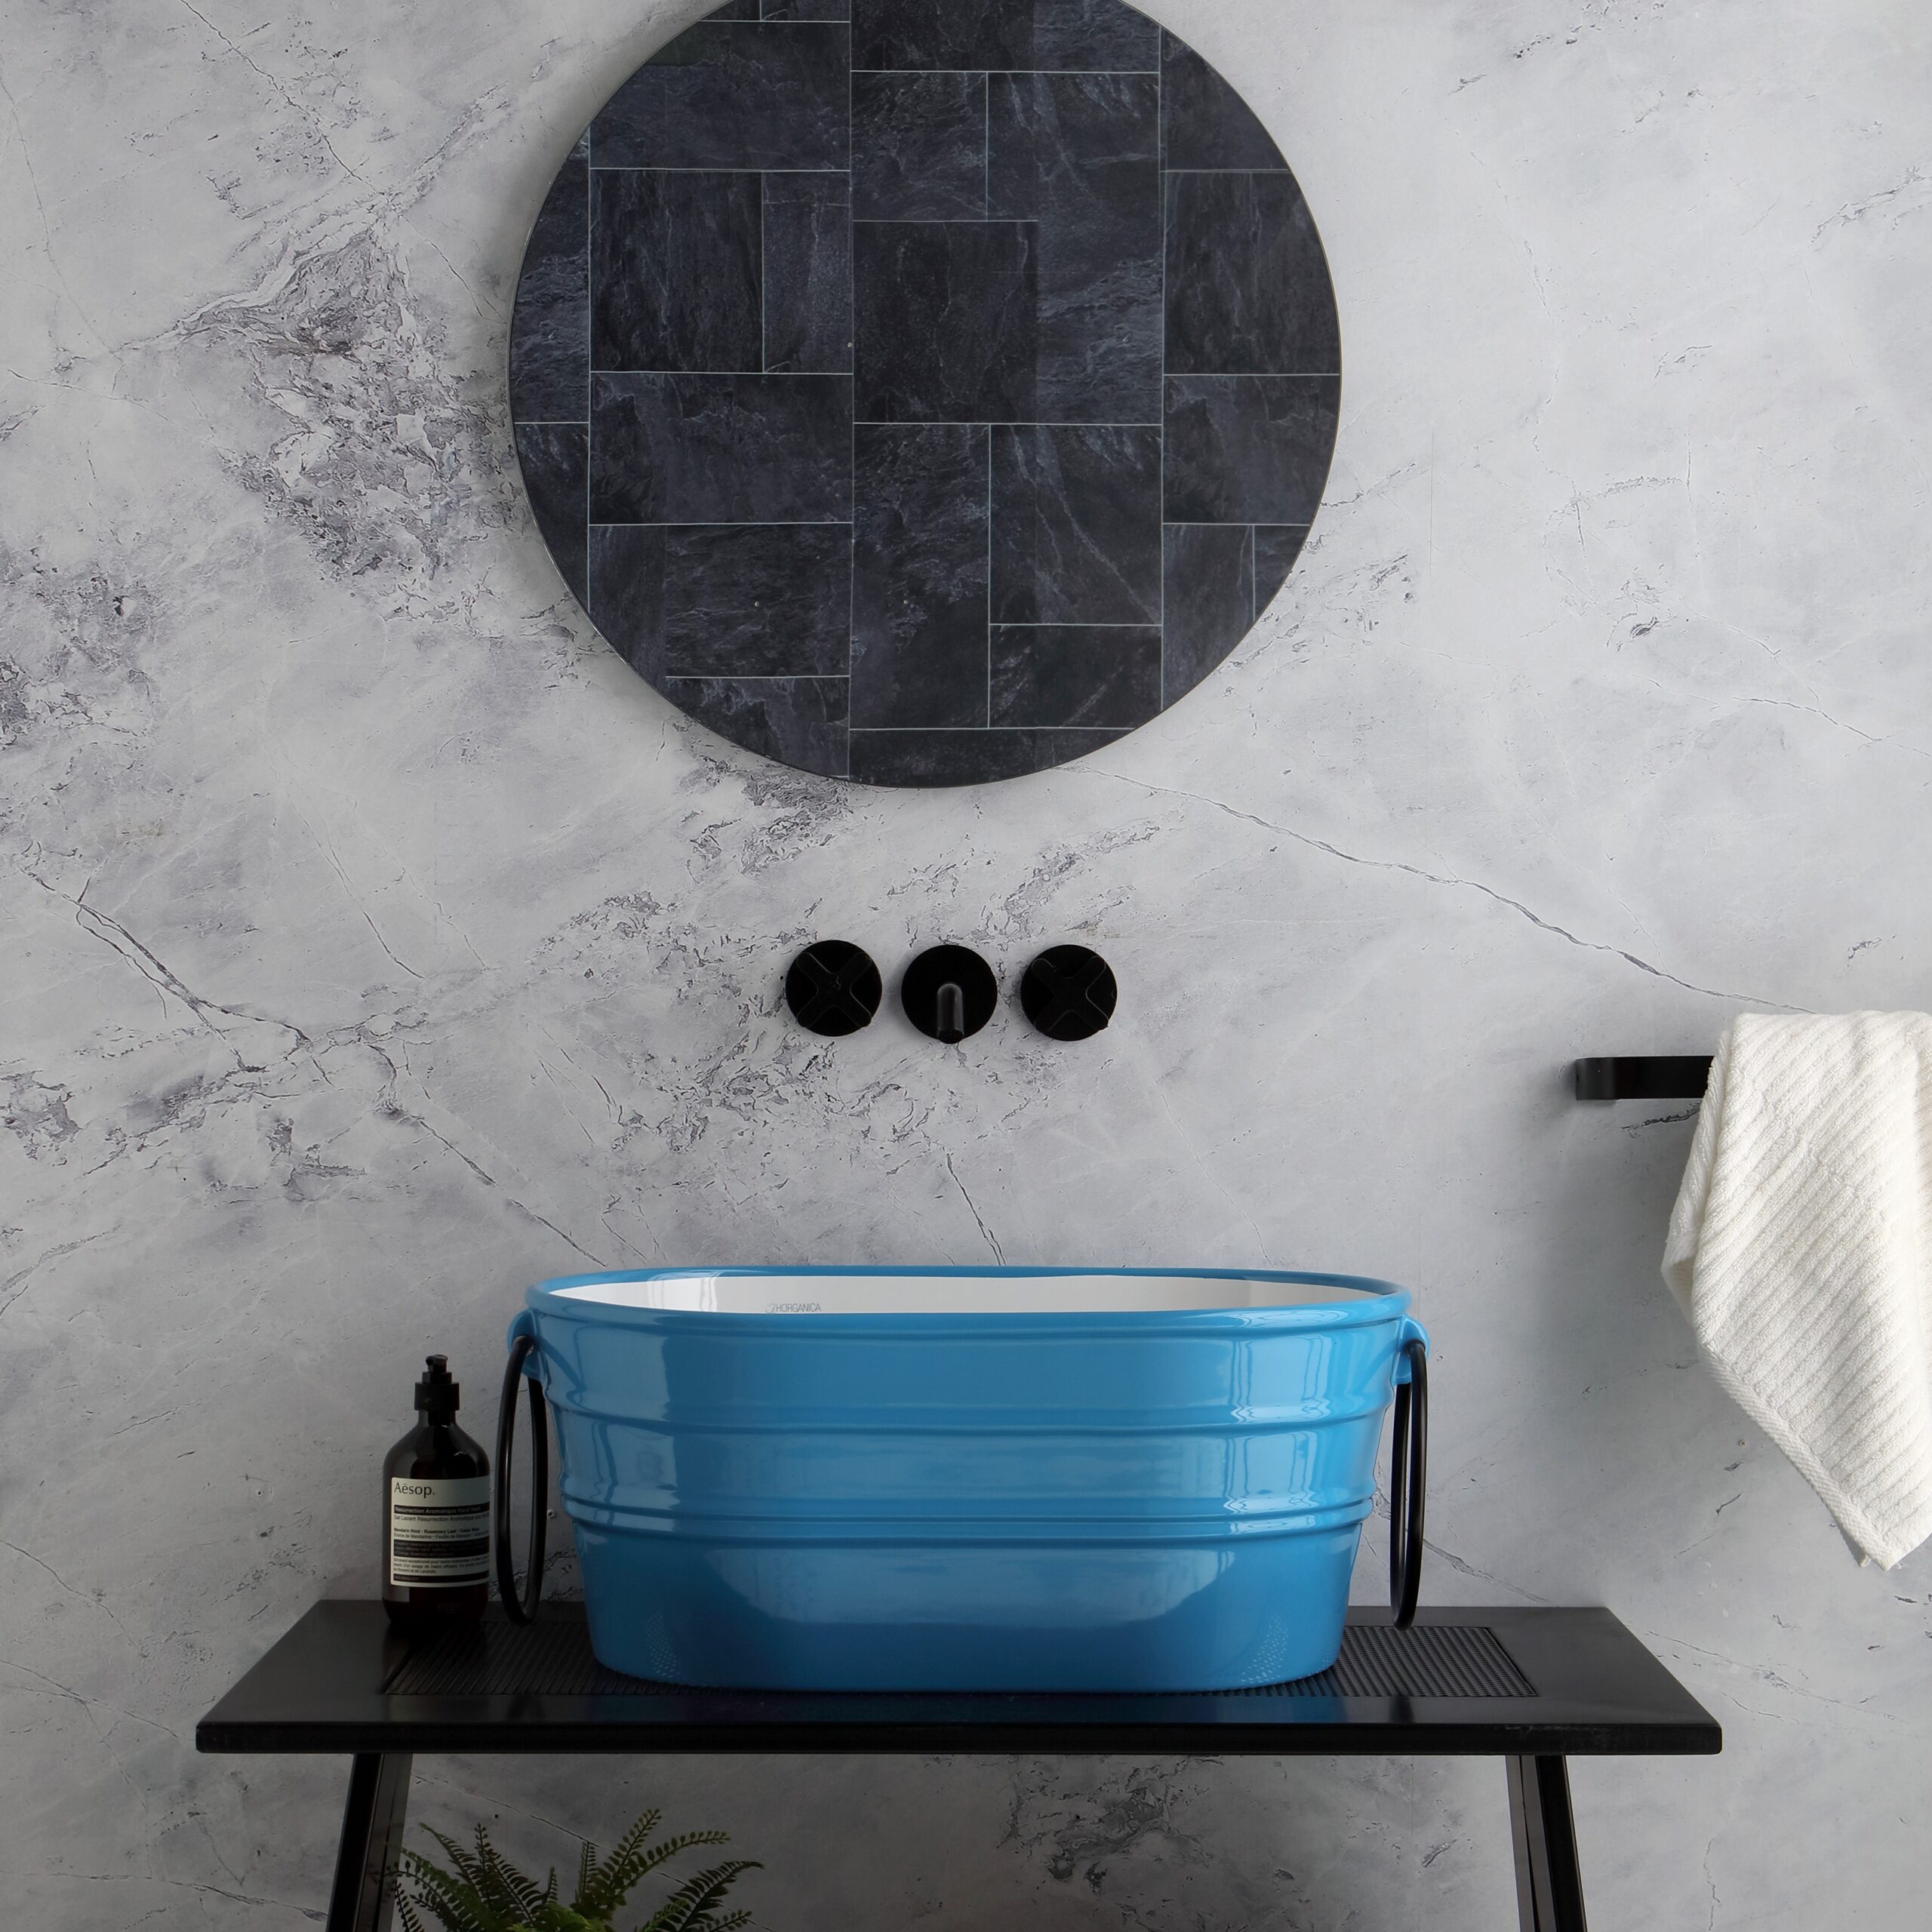 Elongated countertop or wall-hung ceramic washbasin by Horganica